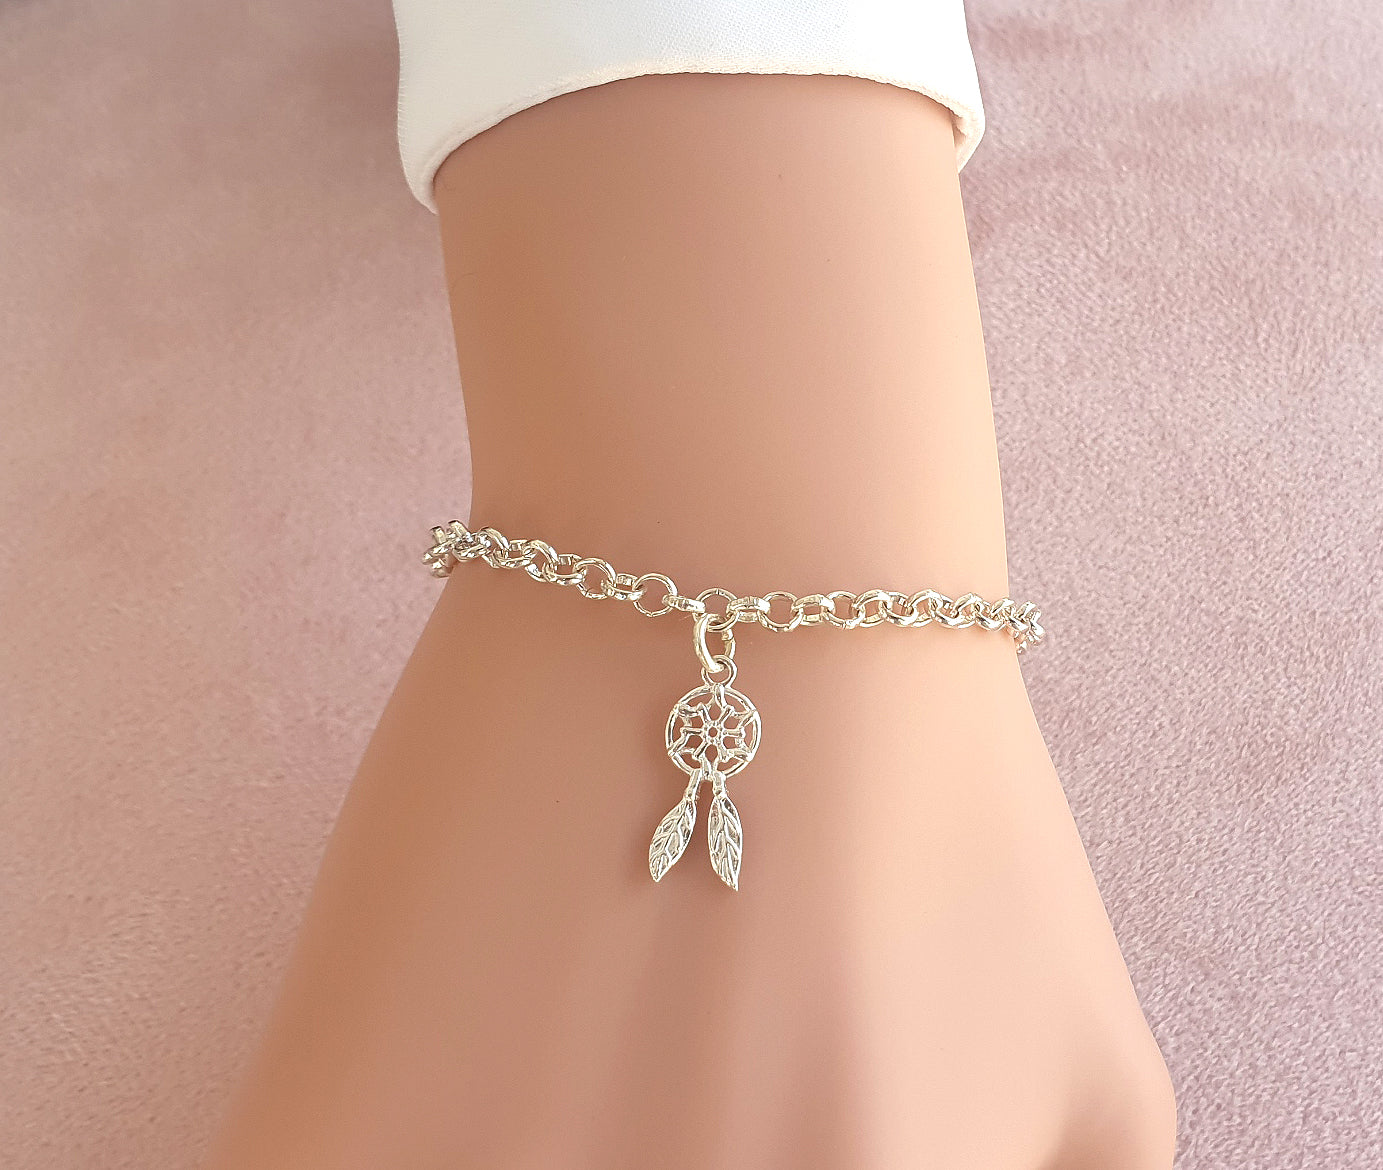 Charmed Dreamcatcher Link Bracelet, Adjustable for Women and Girl's